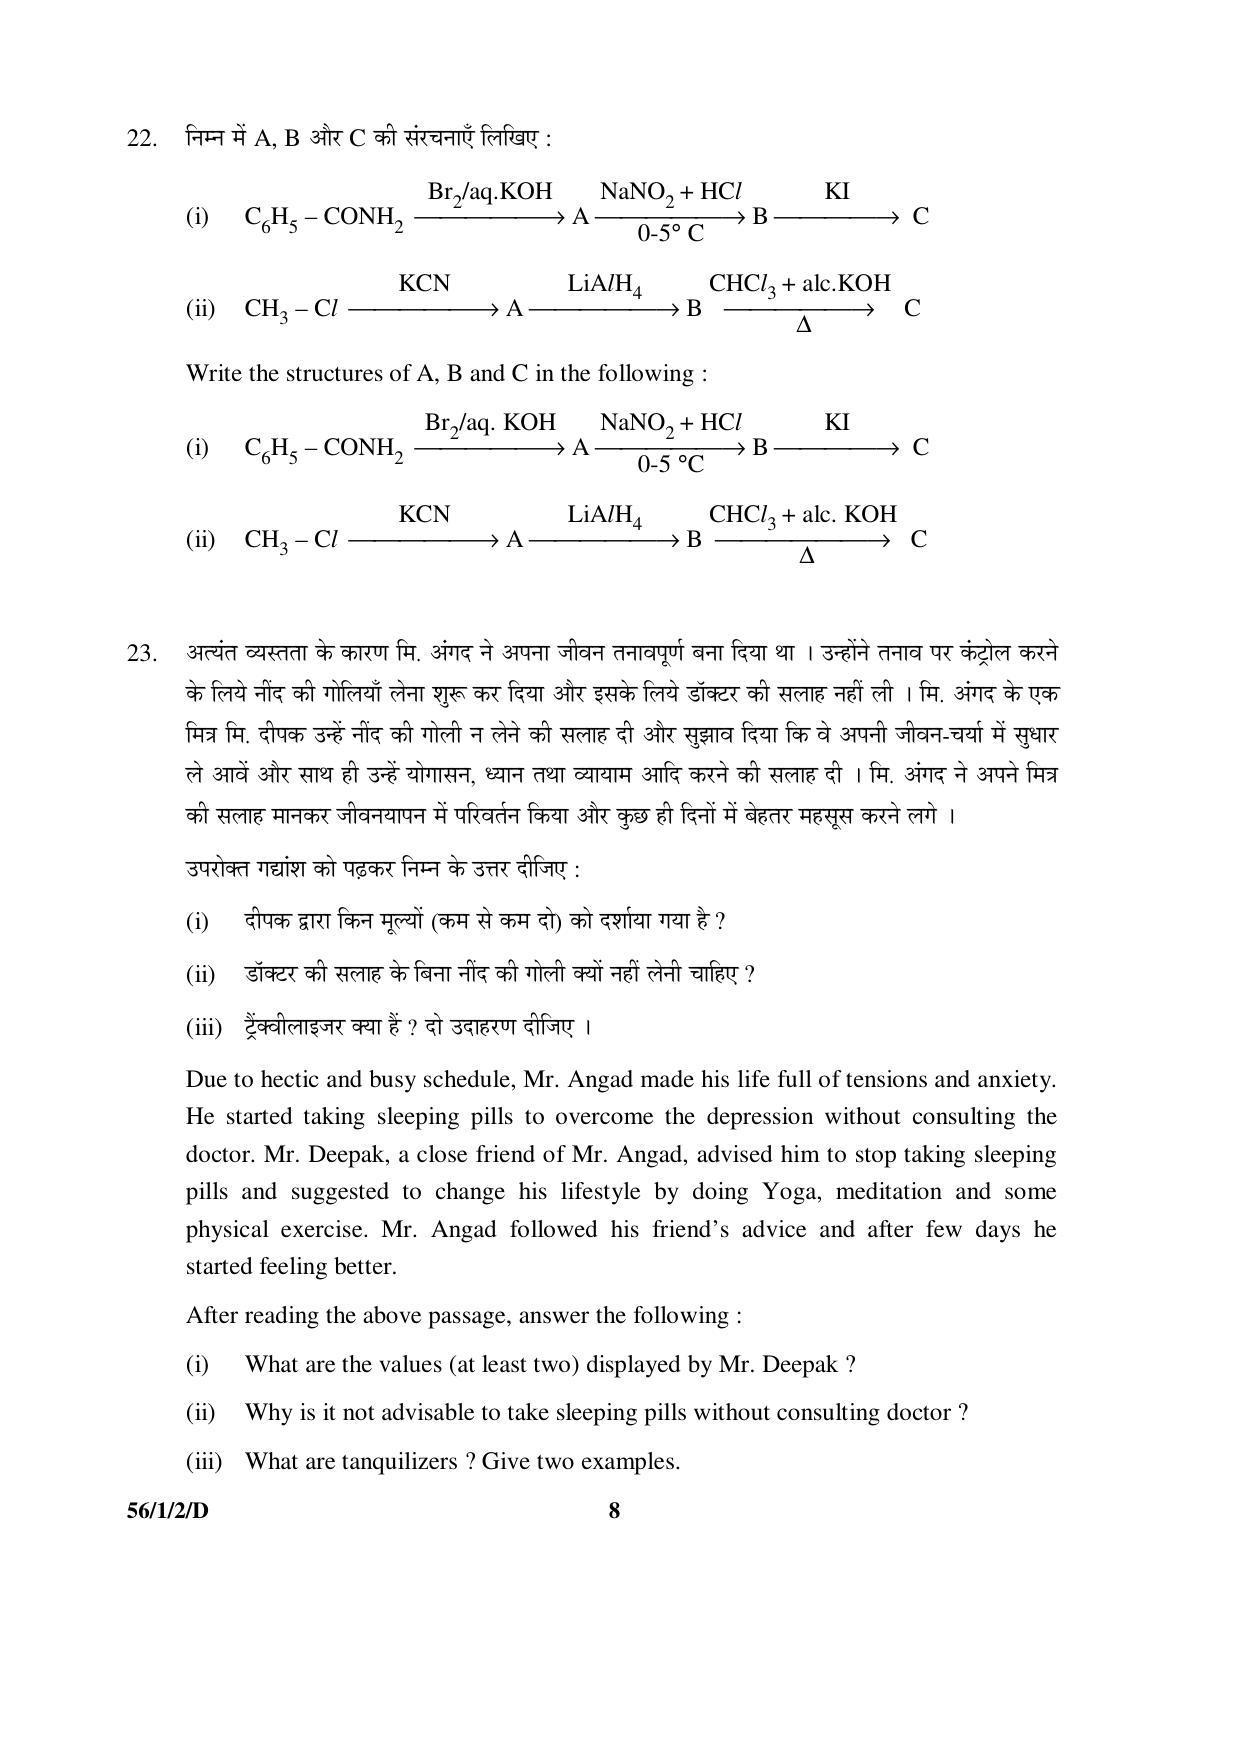 CBSE Class 12 56-1-2-D CHEMISTRY 2016 Question Paper - Page 8